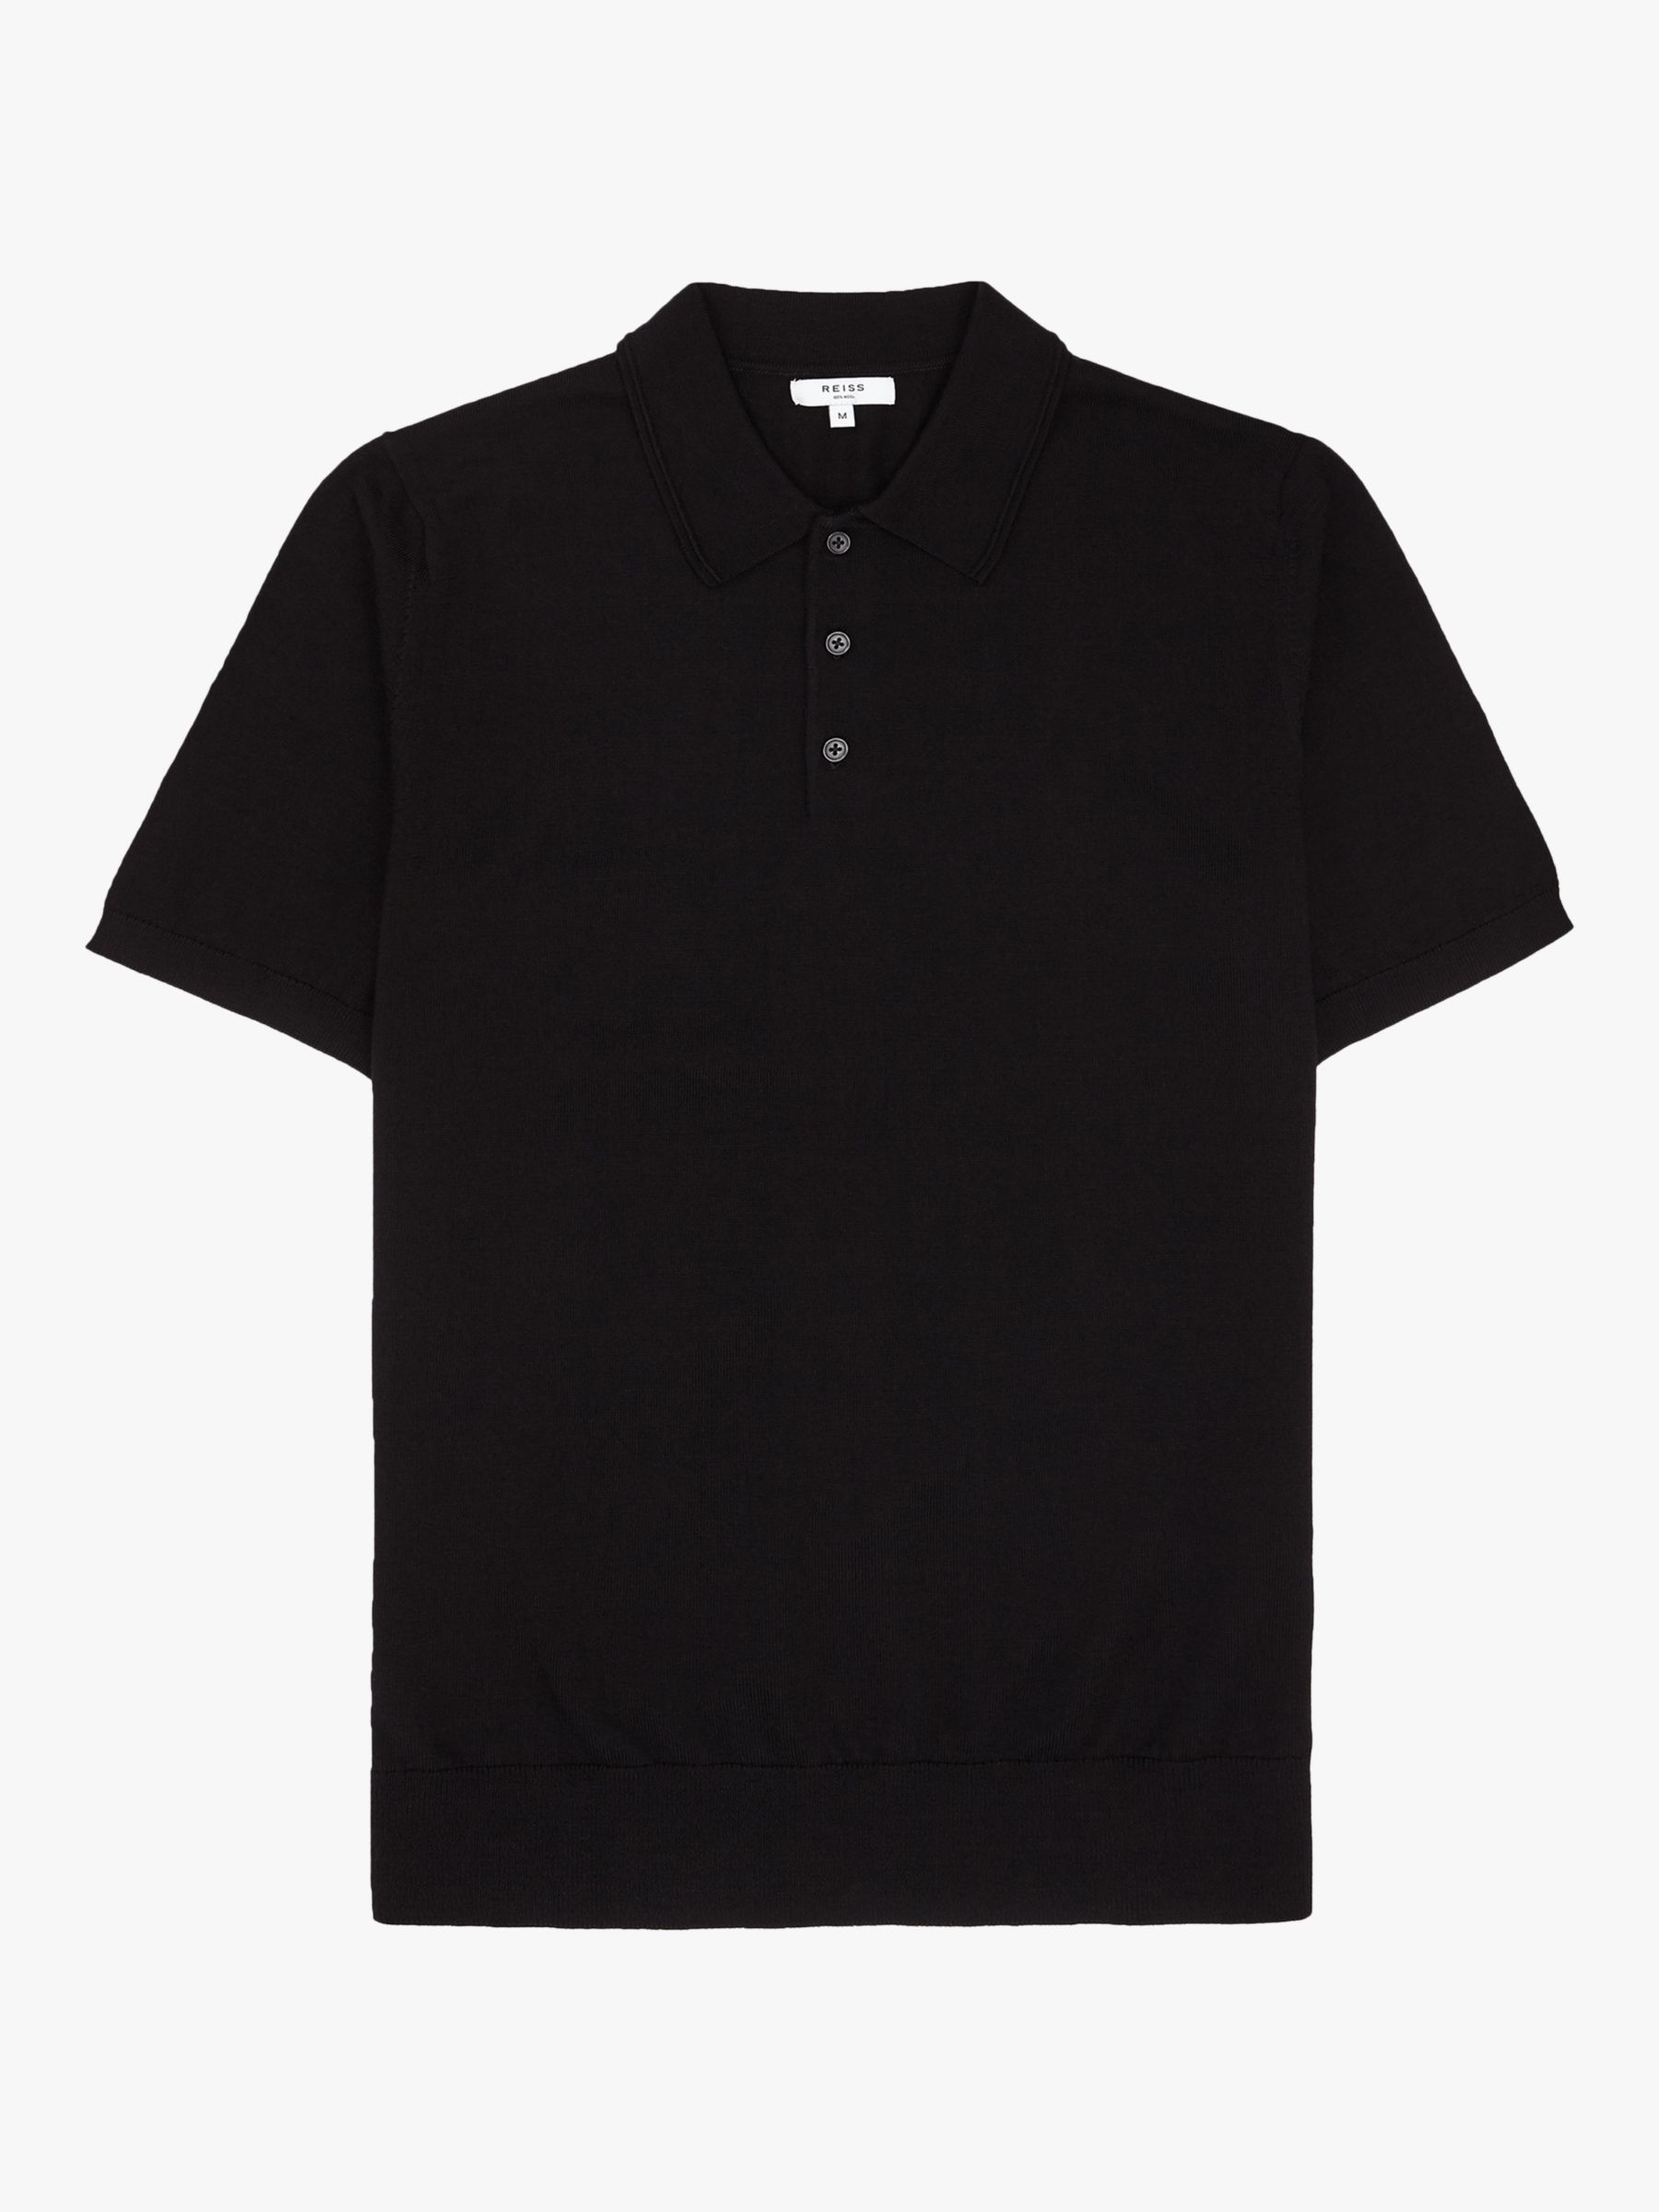 Reiss Manor Knit Polo Shirt, Black